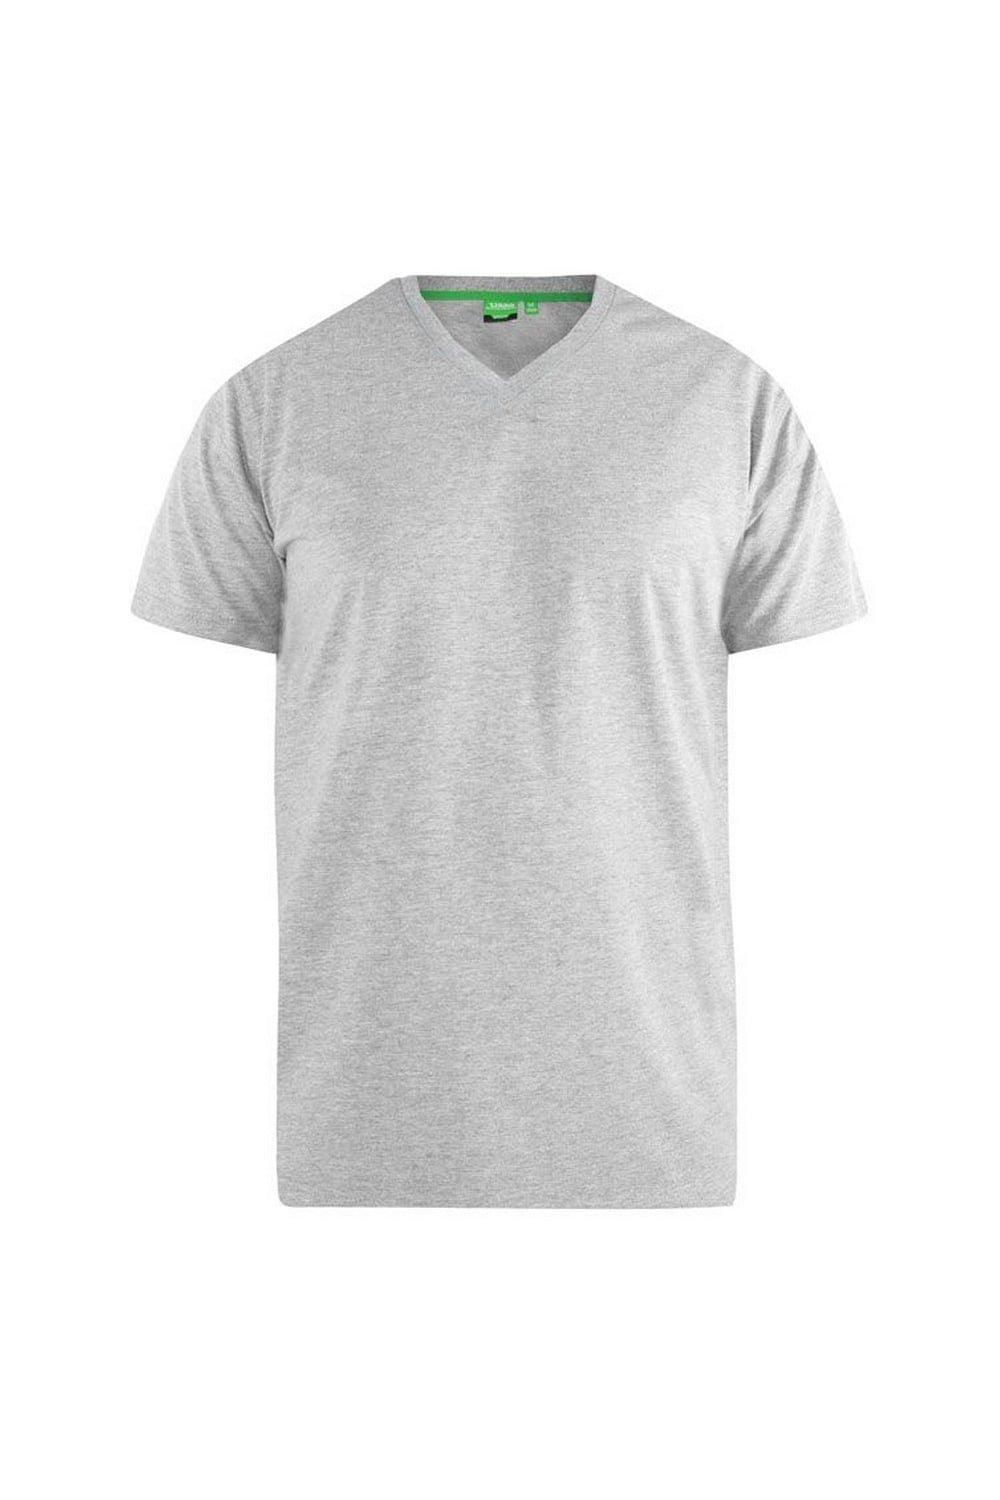 D555 Хлопковая футболка Kingsize Signature-1 Duke Clothing, серый